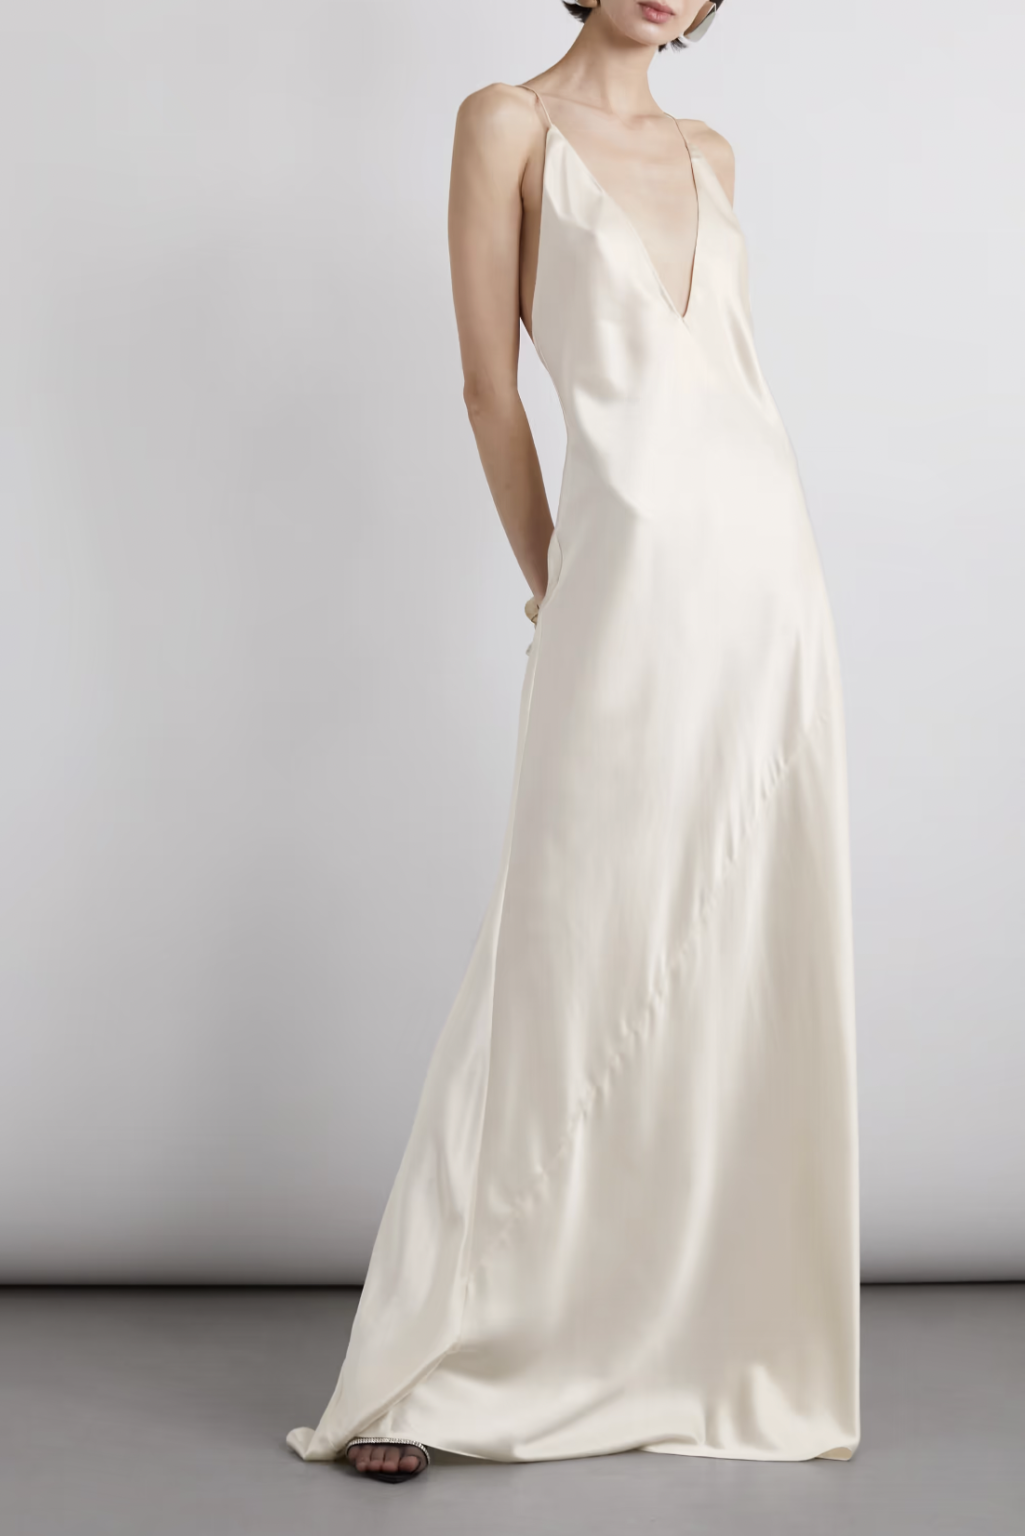 10 Modern Wedding Dresses & Accessories to Shop Online - The Lane ...